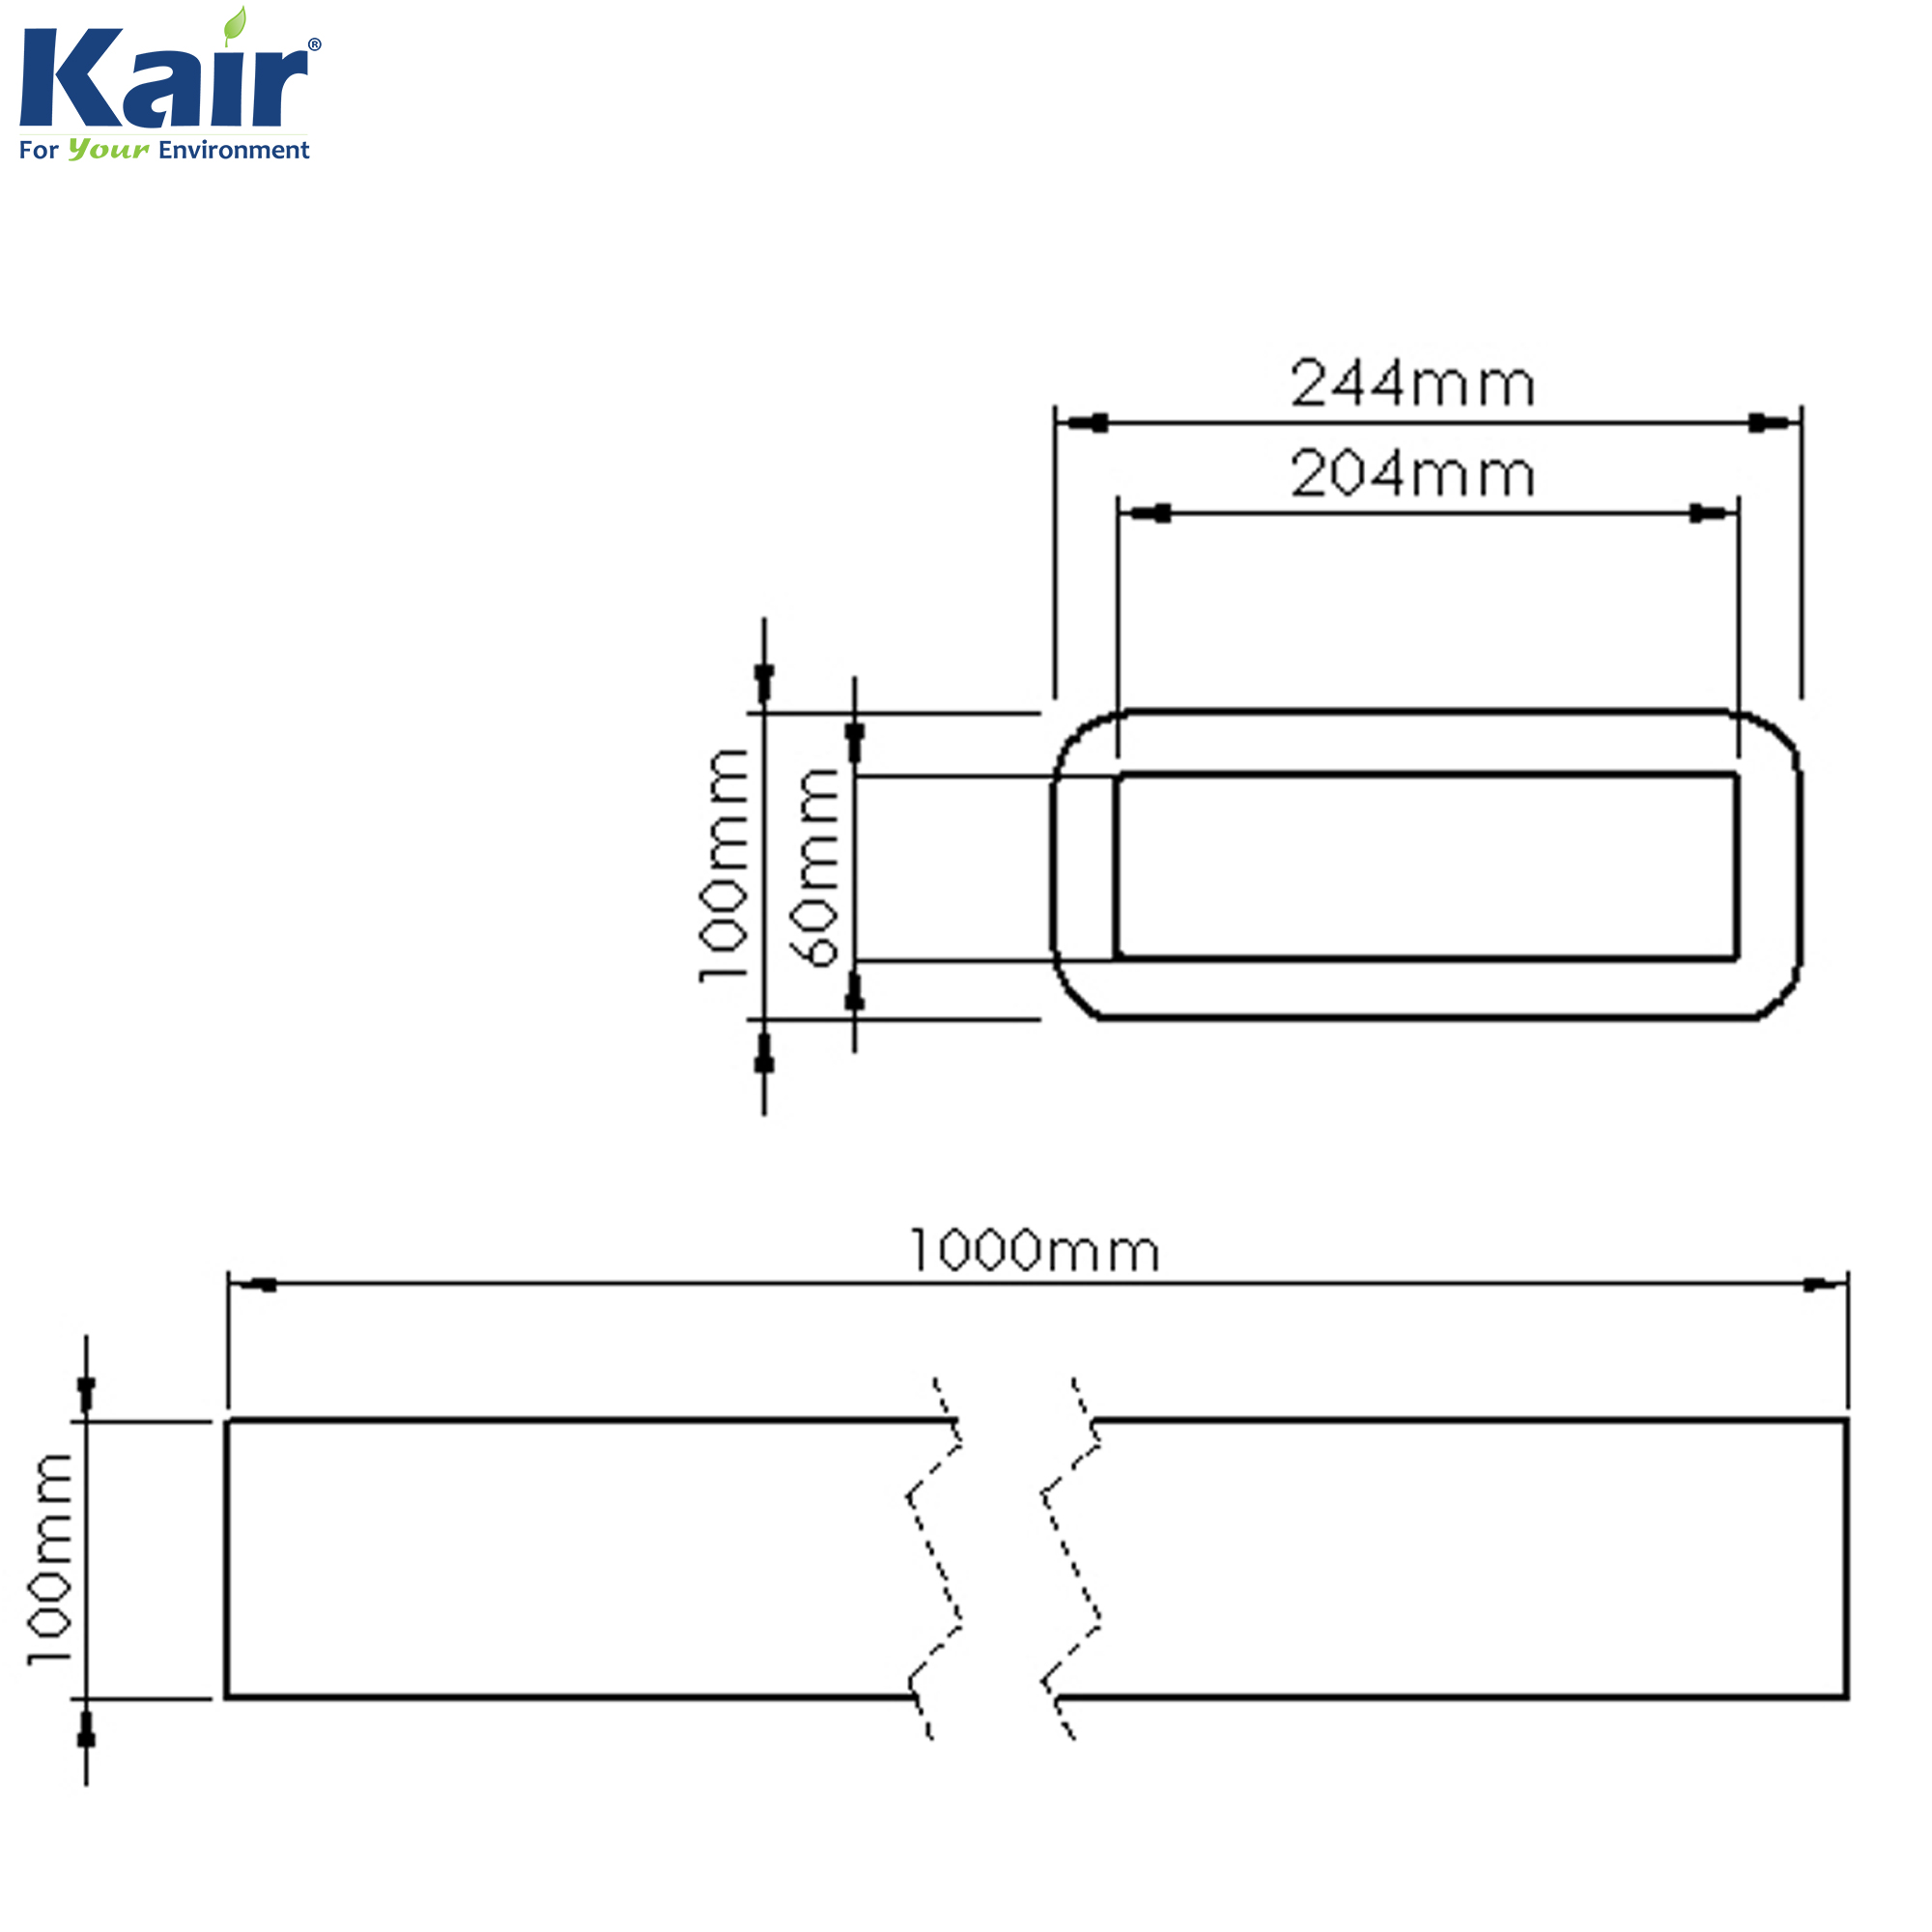 Kair Self-Seal Thermal Ducting - 204 x 60mm - 1 Metre Lengths - Box of 6